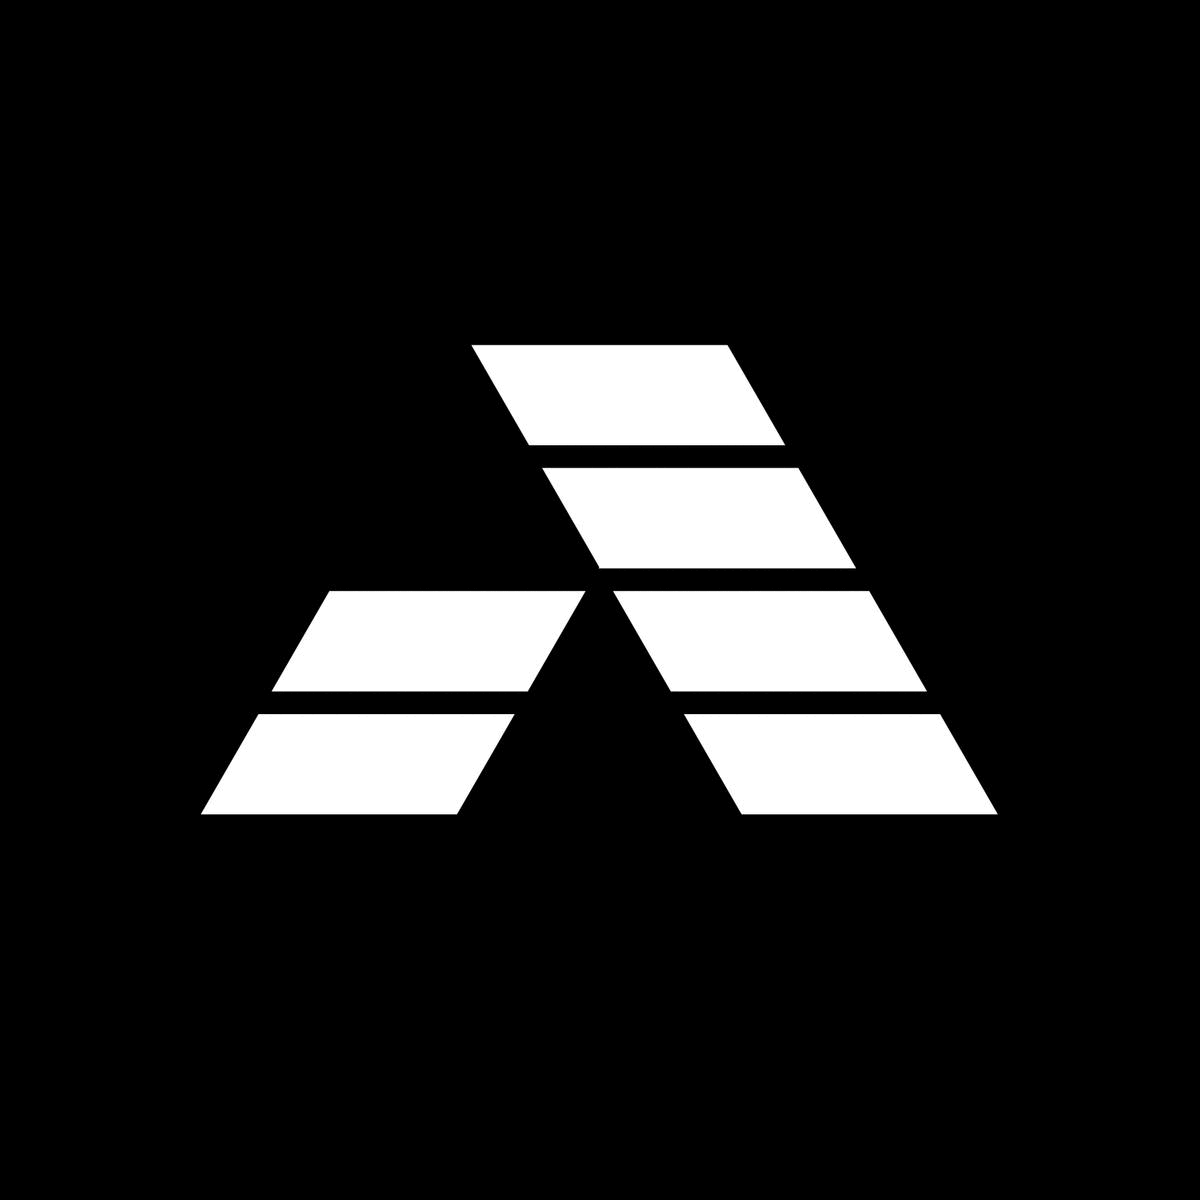 Atari logo design concepts, 1972, George Oppermann and Evelyn Seto, LogoArchive, Logo Histories